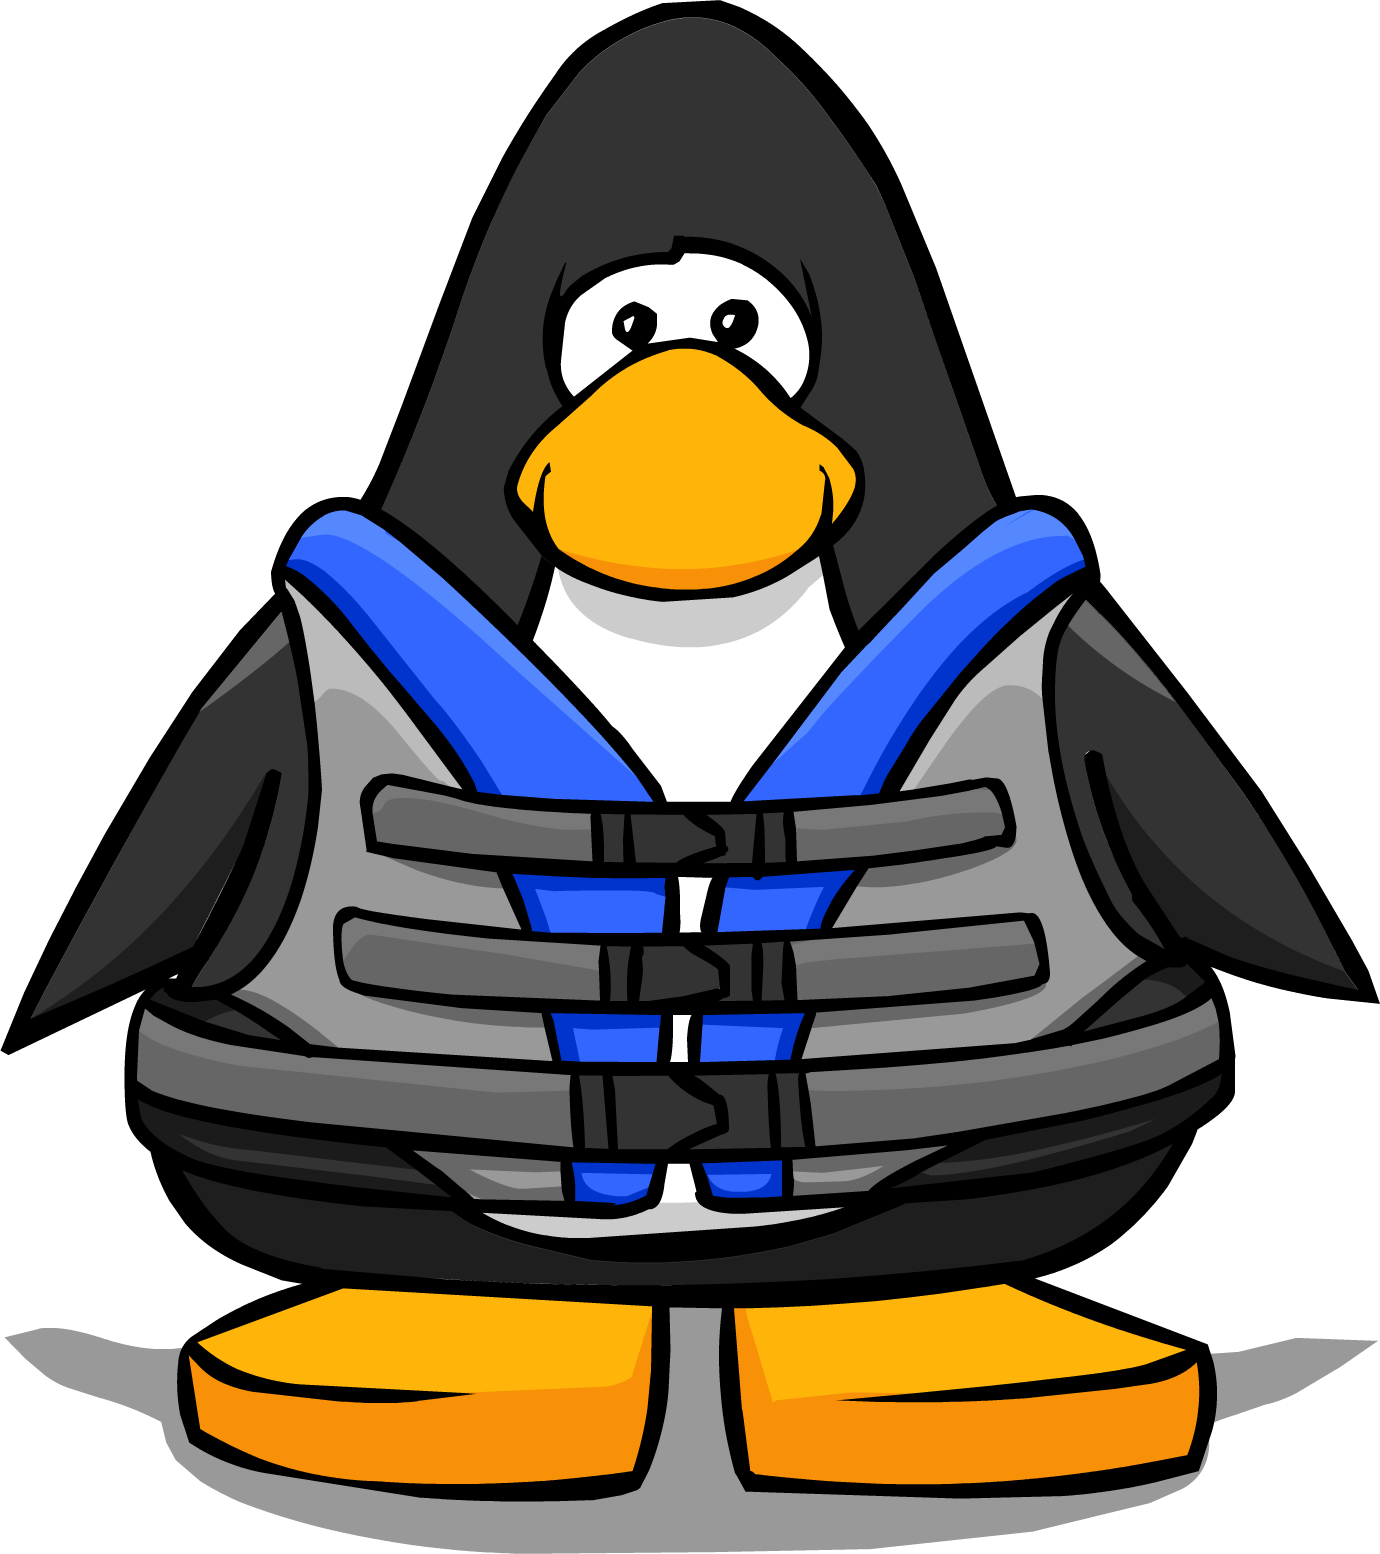 Sport Life Jacket Pc - Club Penguin Blue Boa (1380x1554)